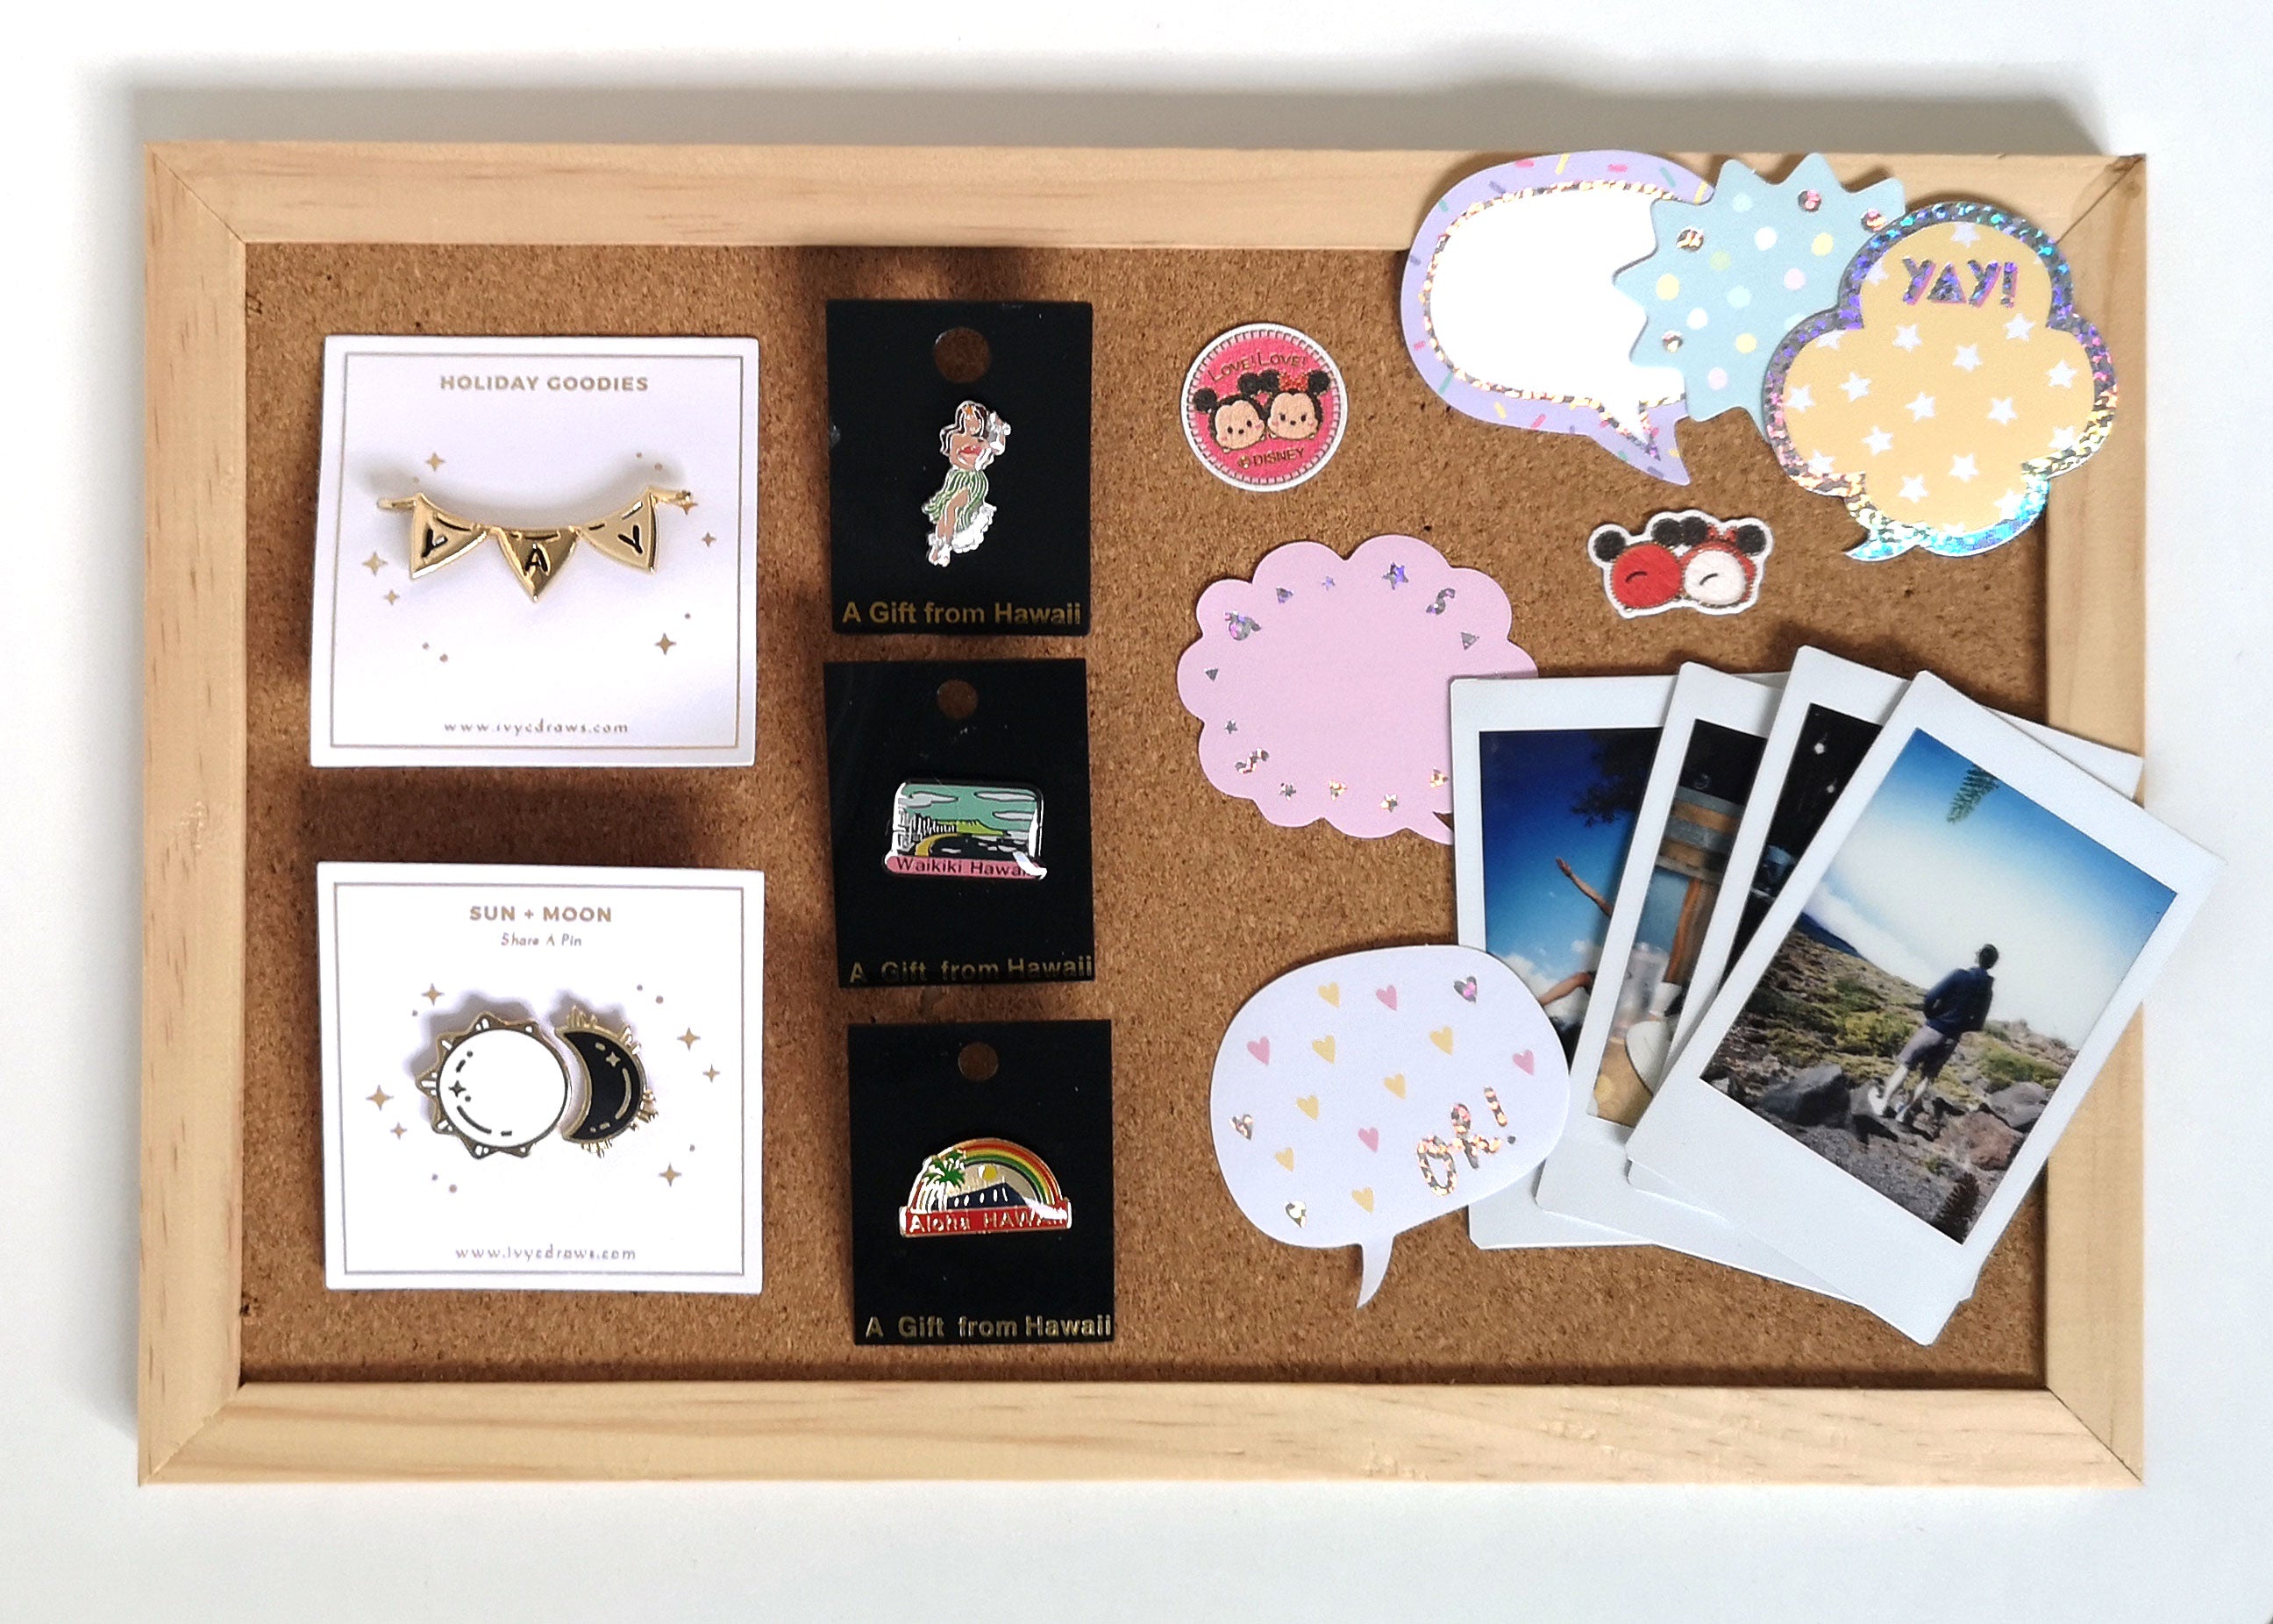 enamel pins, stickers, souvenirs, and polaroids